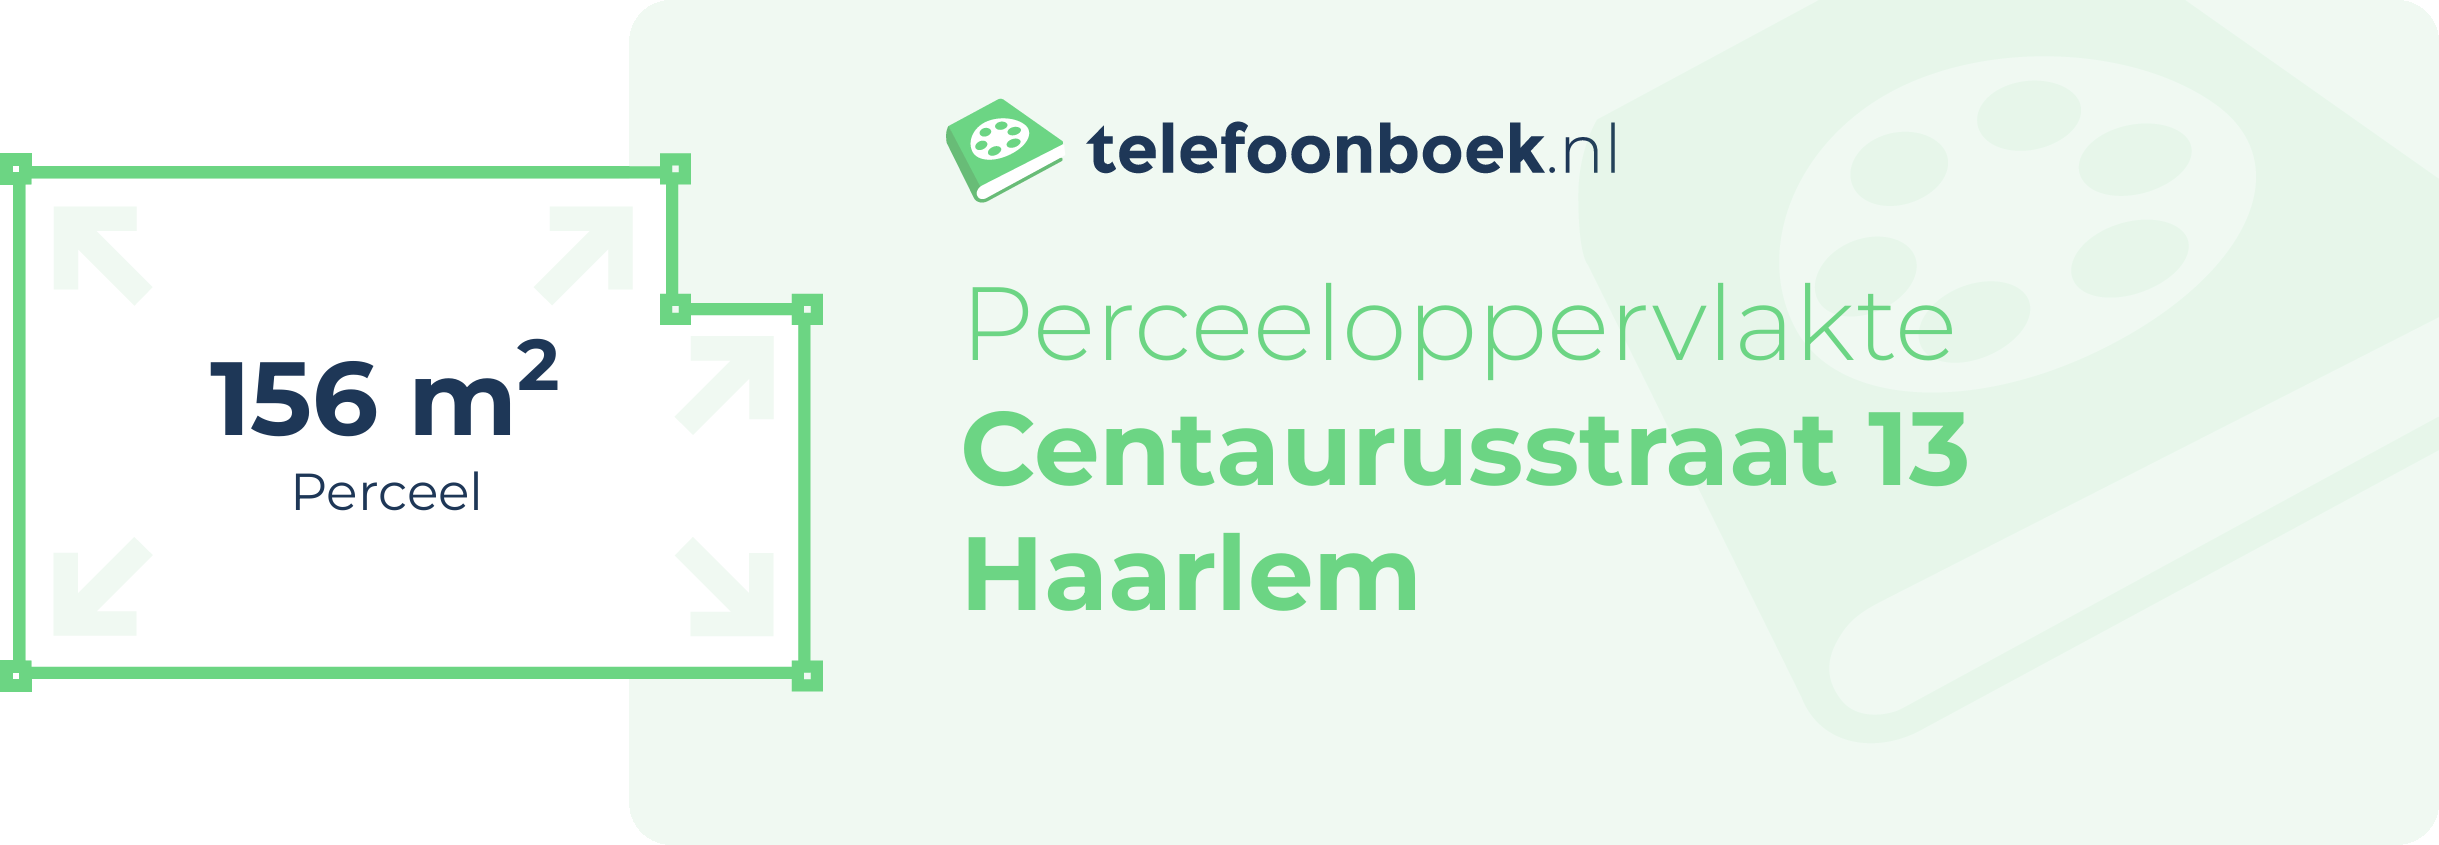 Perceeloppervlakte Centaurusstraat 13 Haarlem